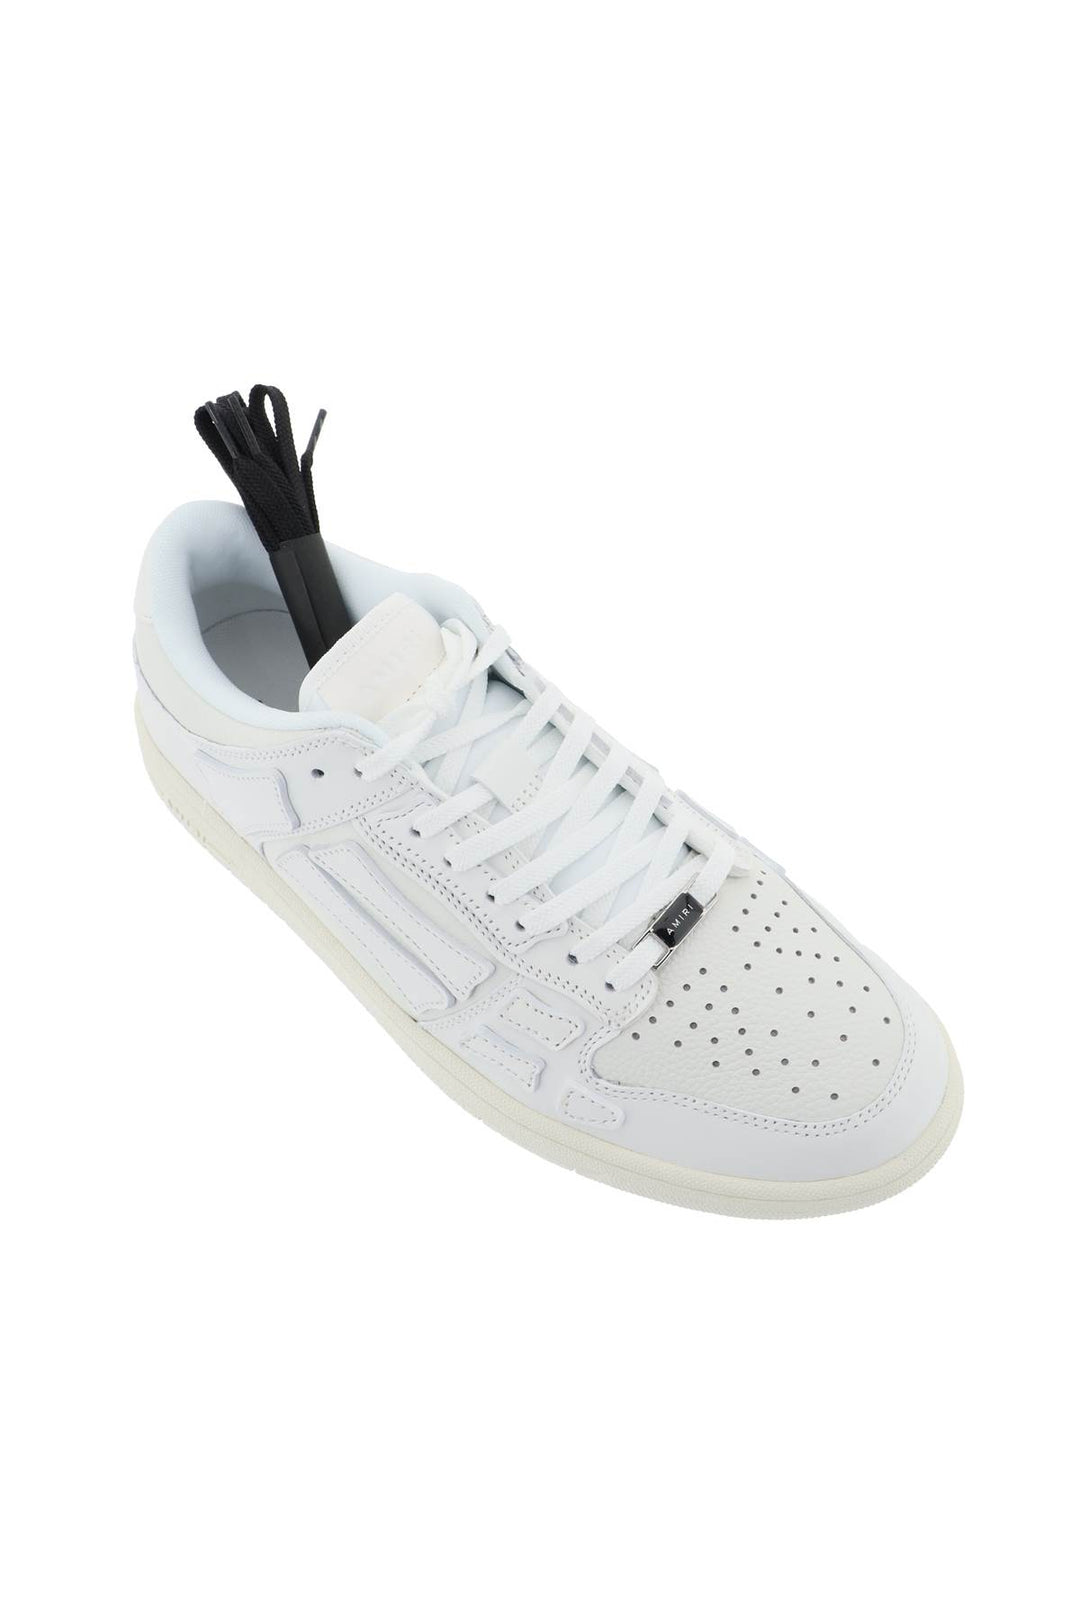 Sneakers Skel Top Low - Amiri - Uomo